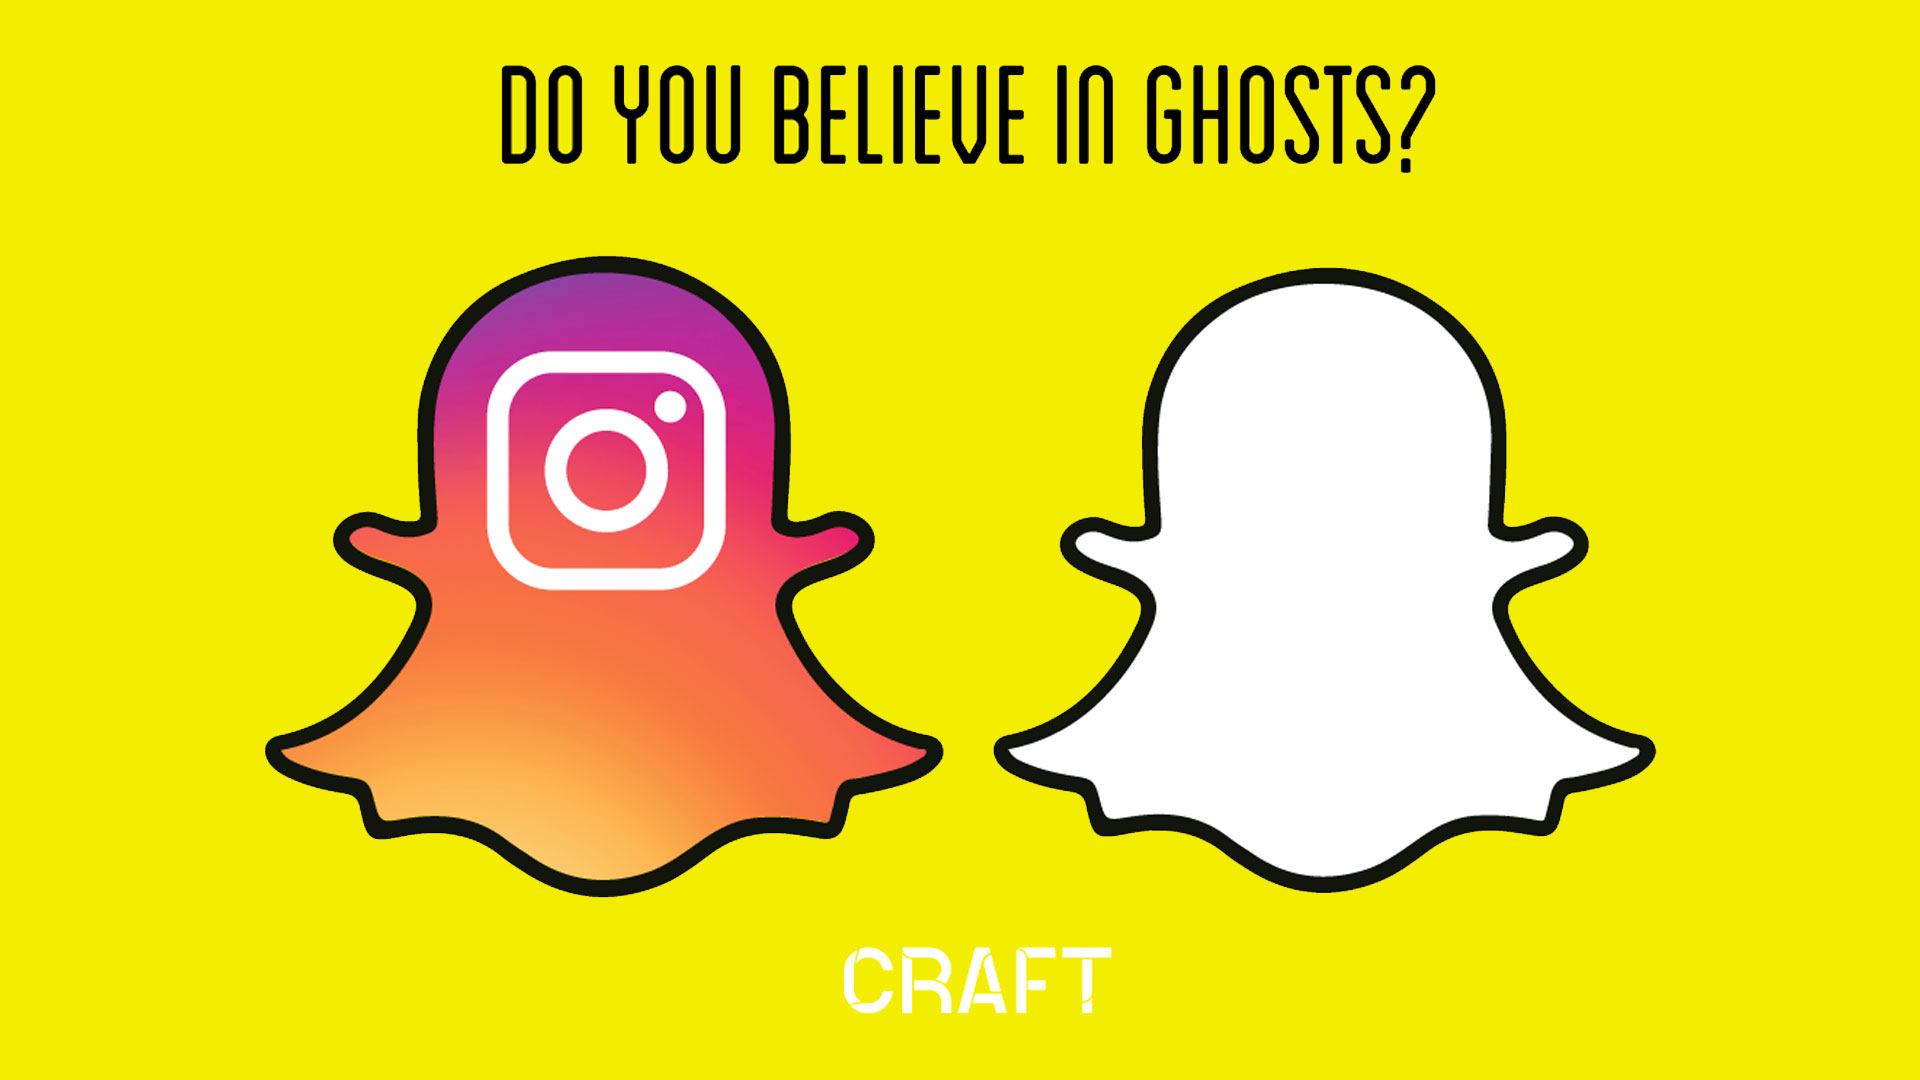 Instagram believes in ghosts. Do you?